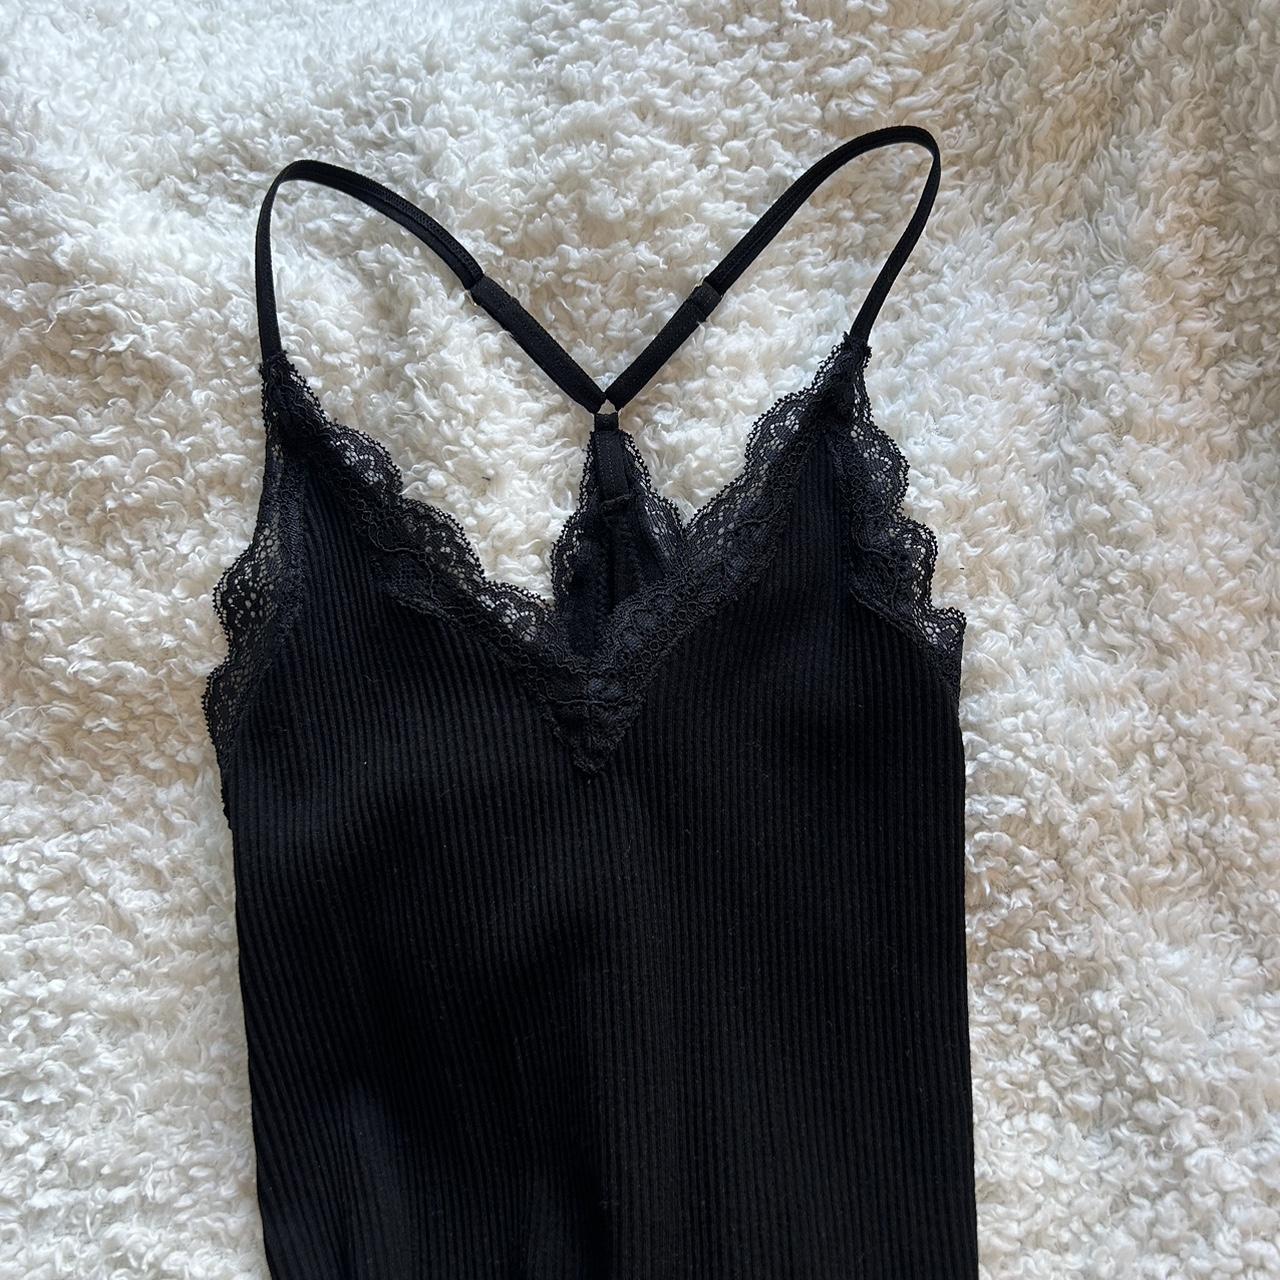 Lace Black Padded Bra Thong Bodysuit i accept - Depop